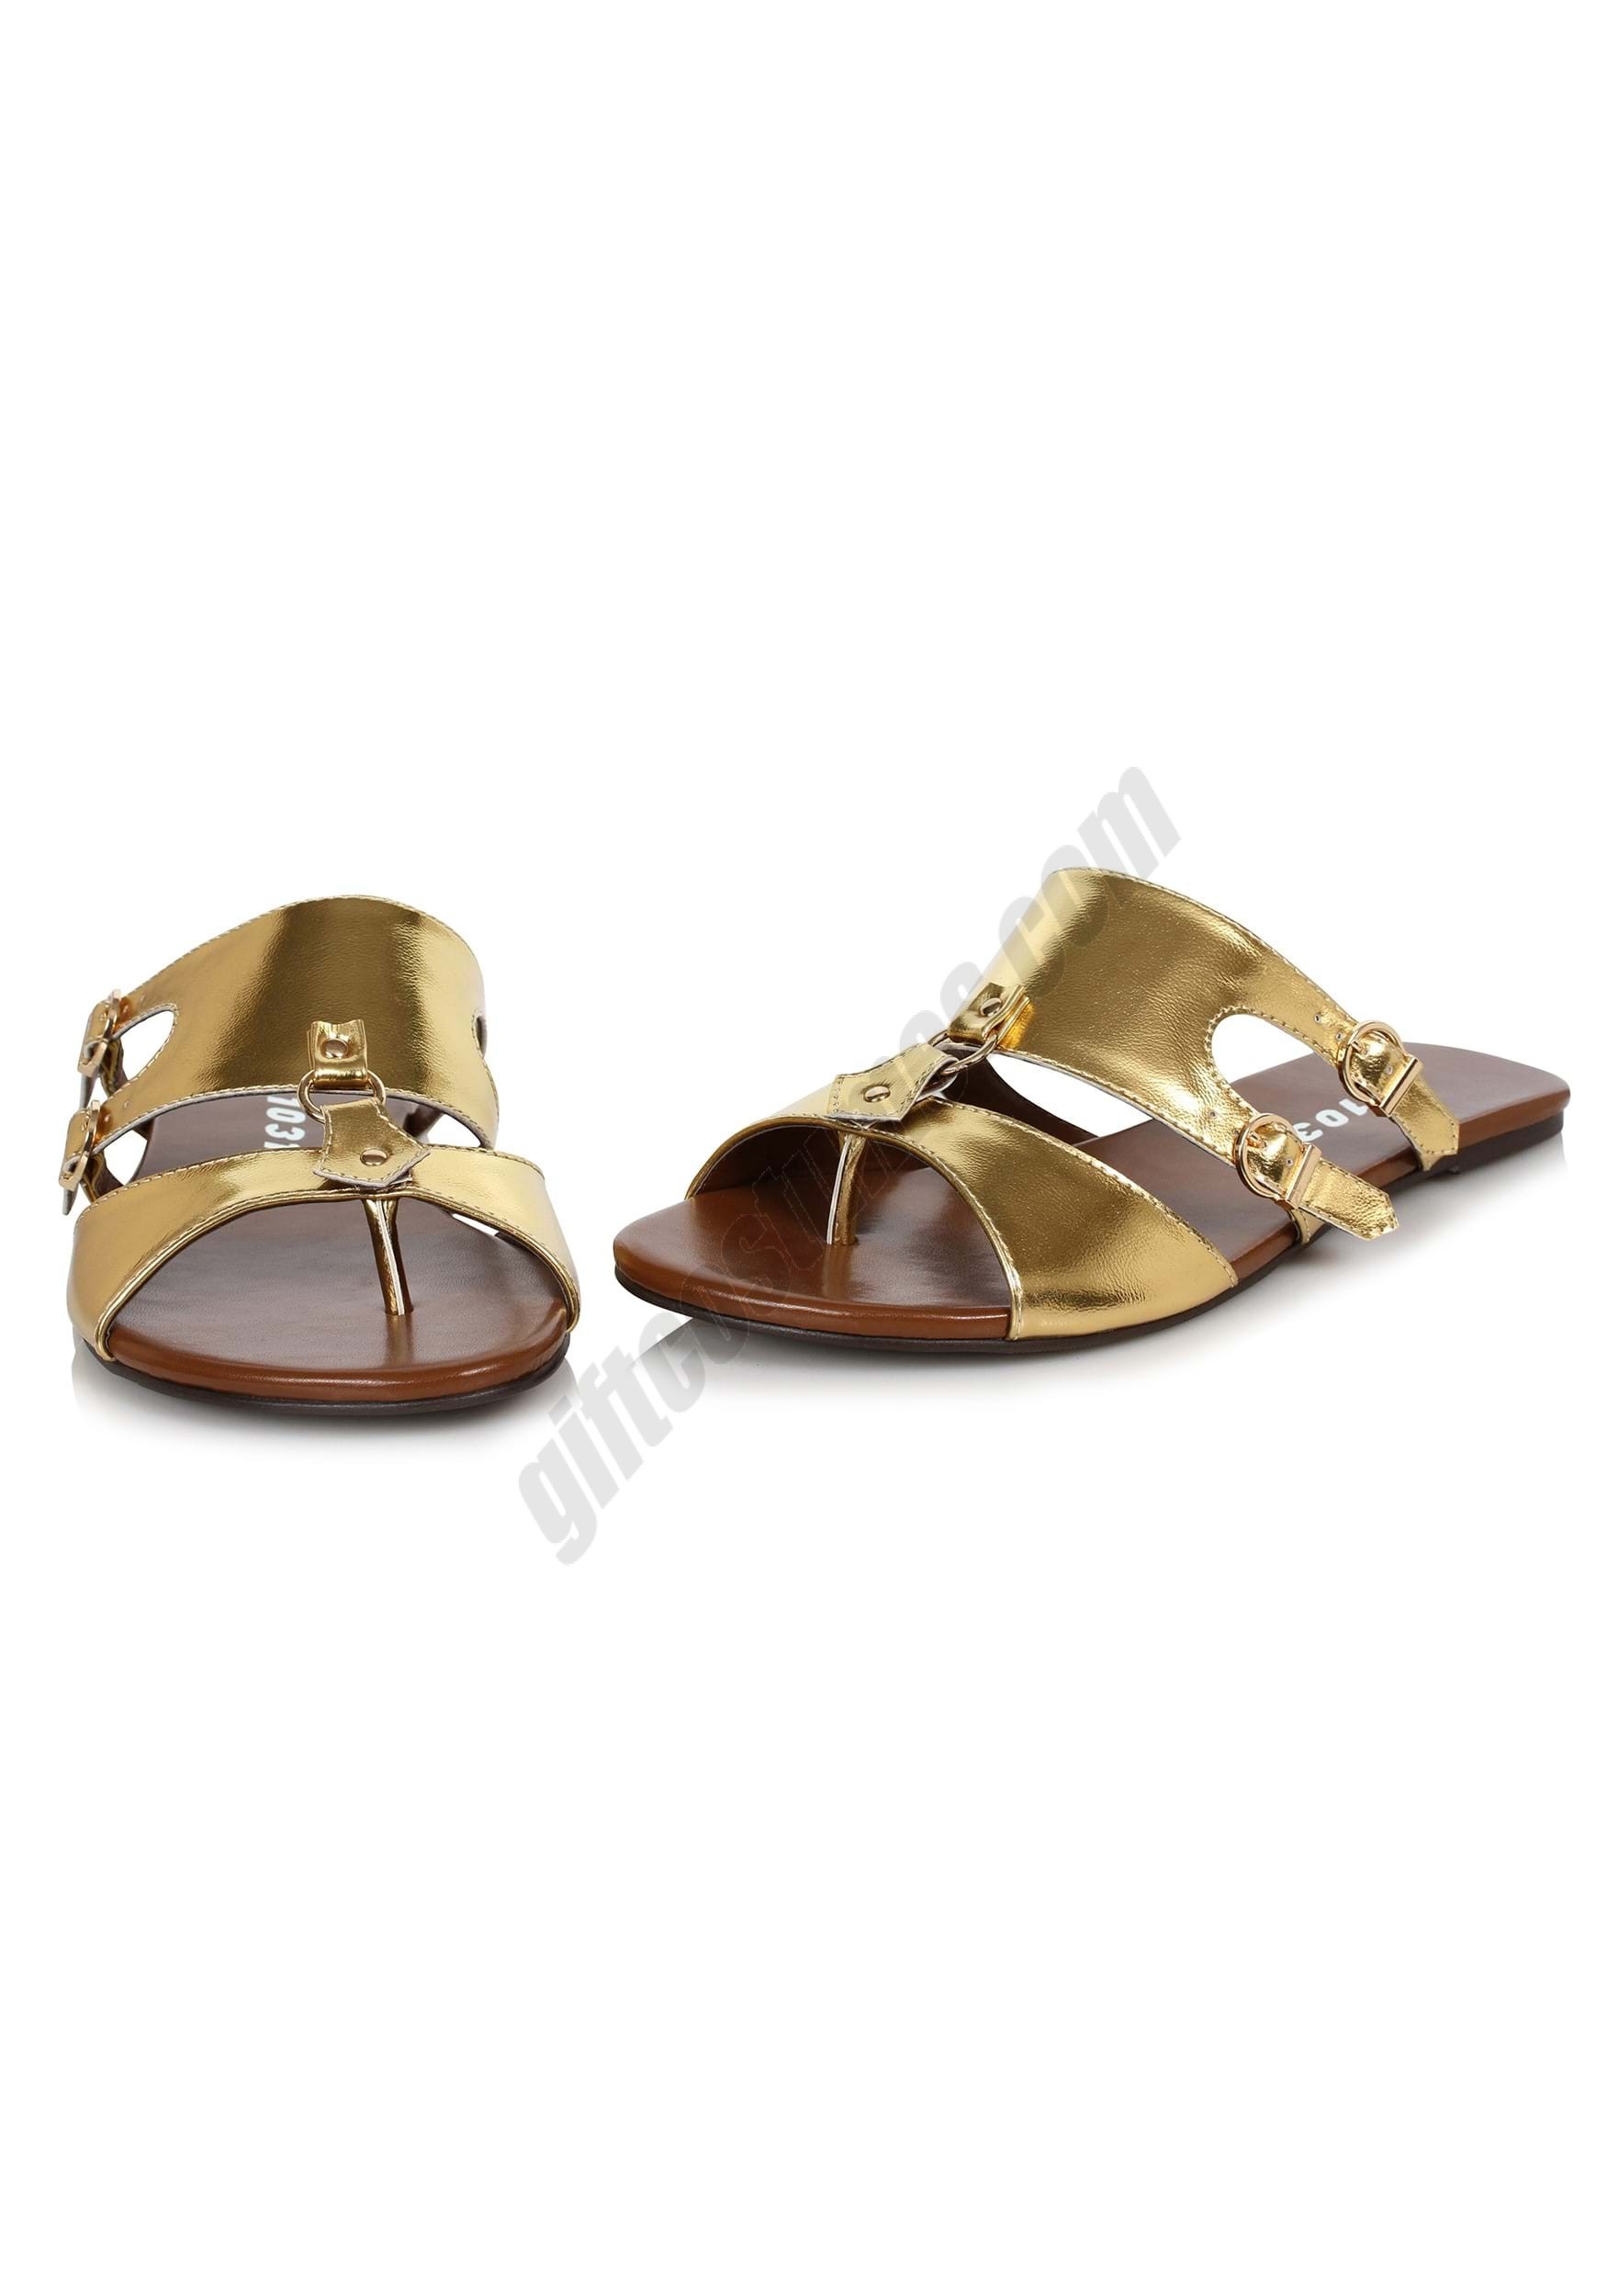 Egyptian Sandals for Men Promotions - Egyptian Sandals for Men Promotions